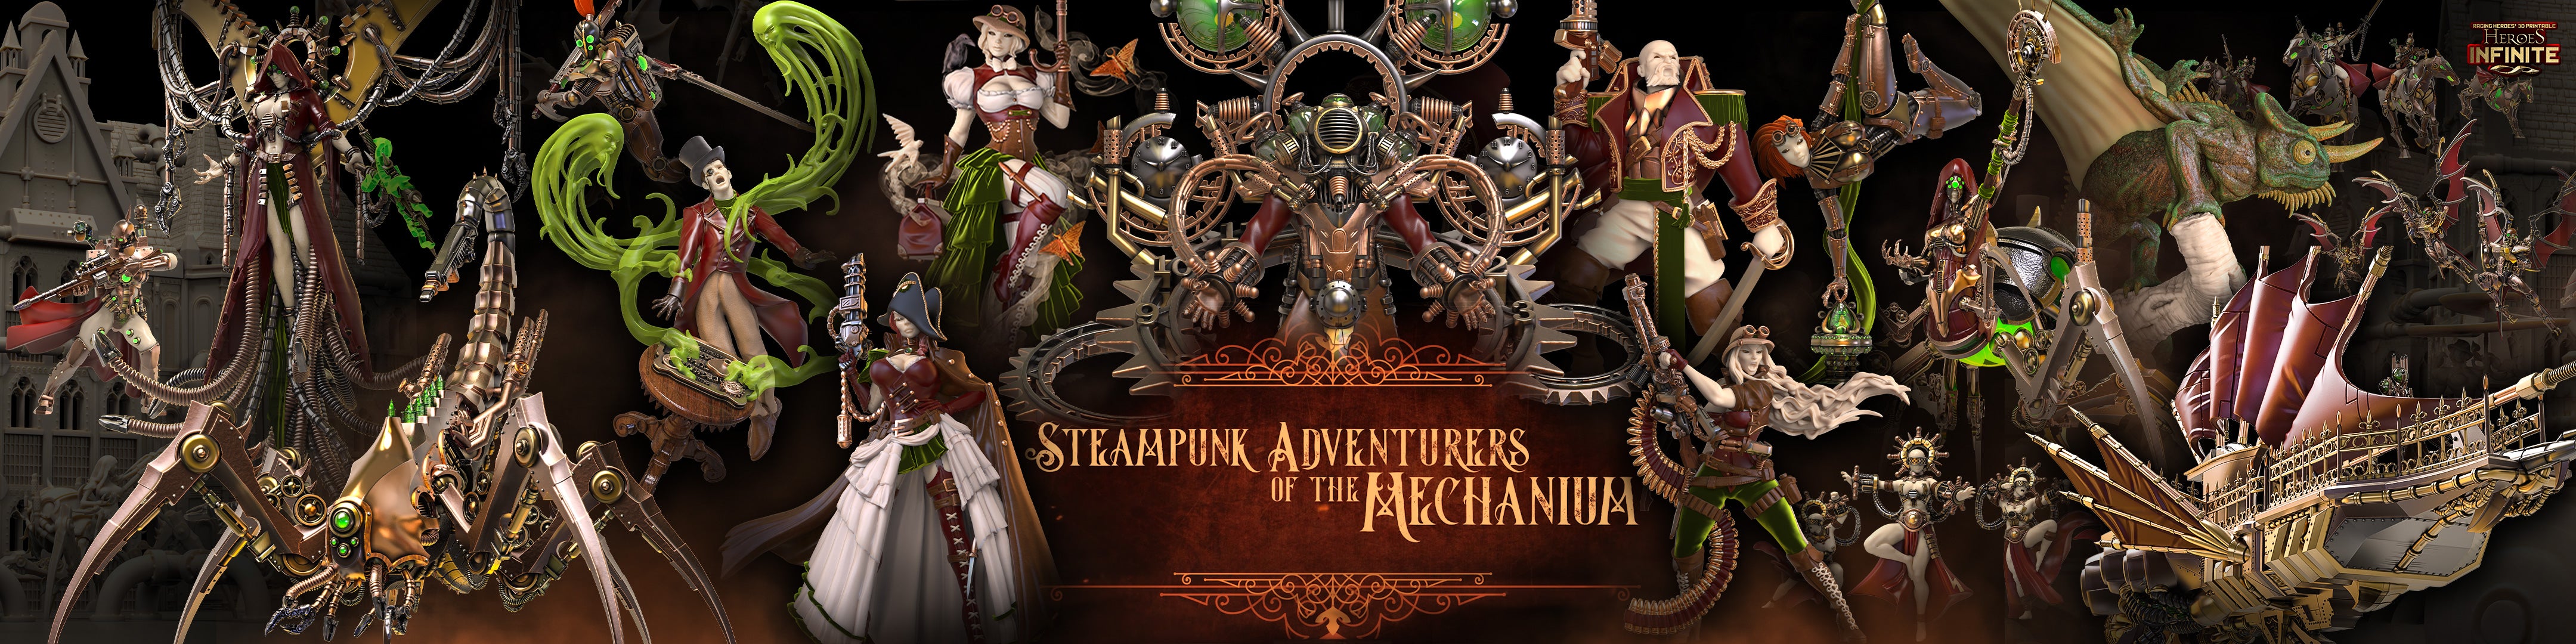 Steampunk-Banner-thin.jpg